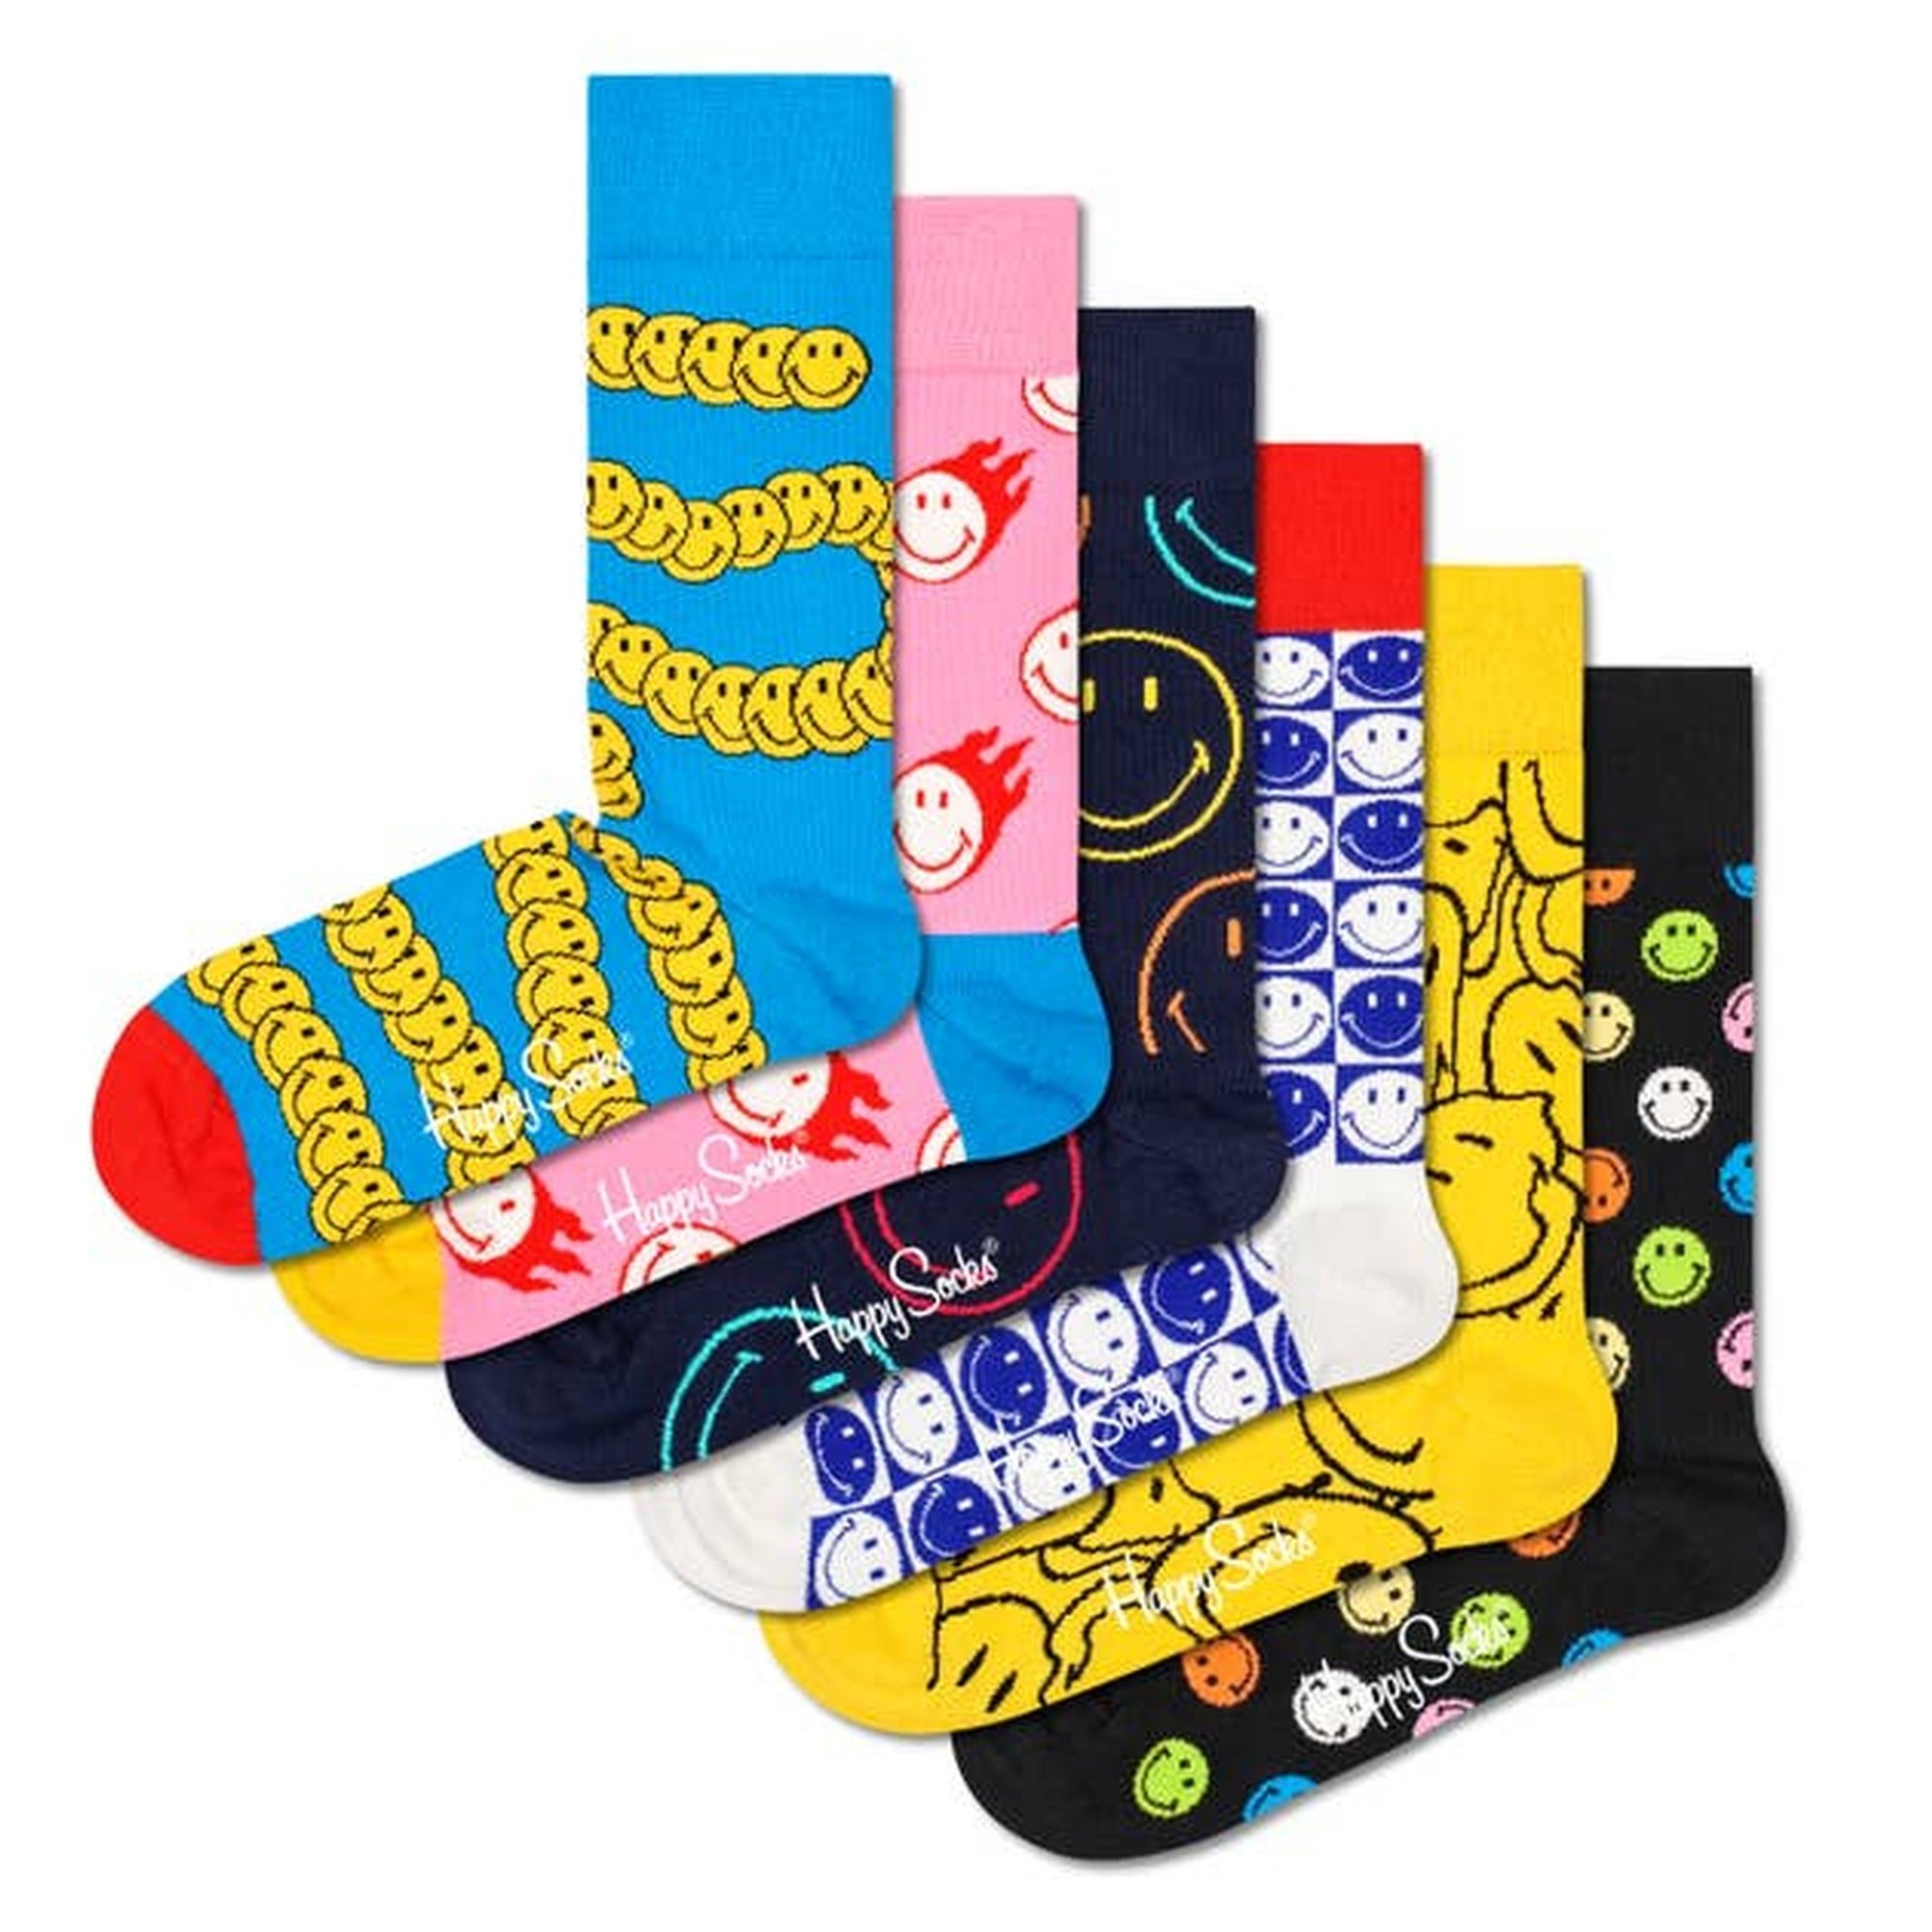 Pack 6 Pares De Calcetines Happy Socks Smiley Gift Set - Multicolor  MKP